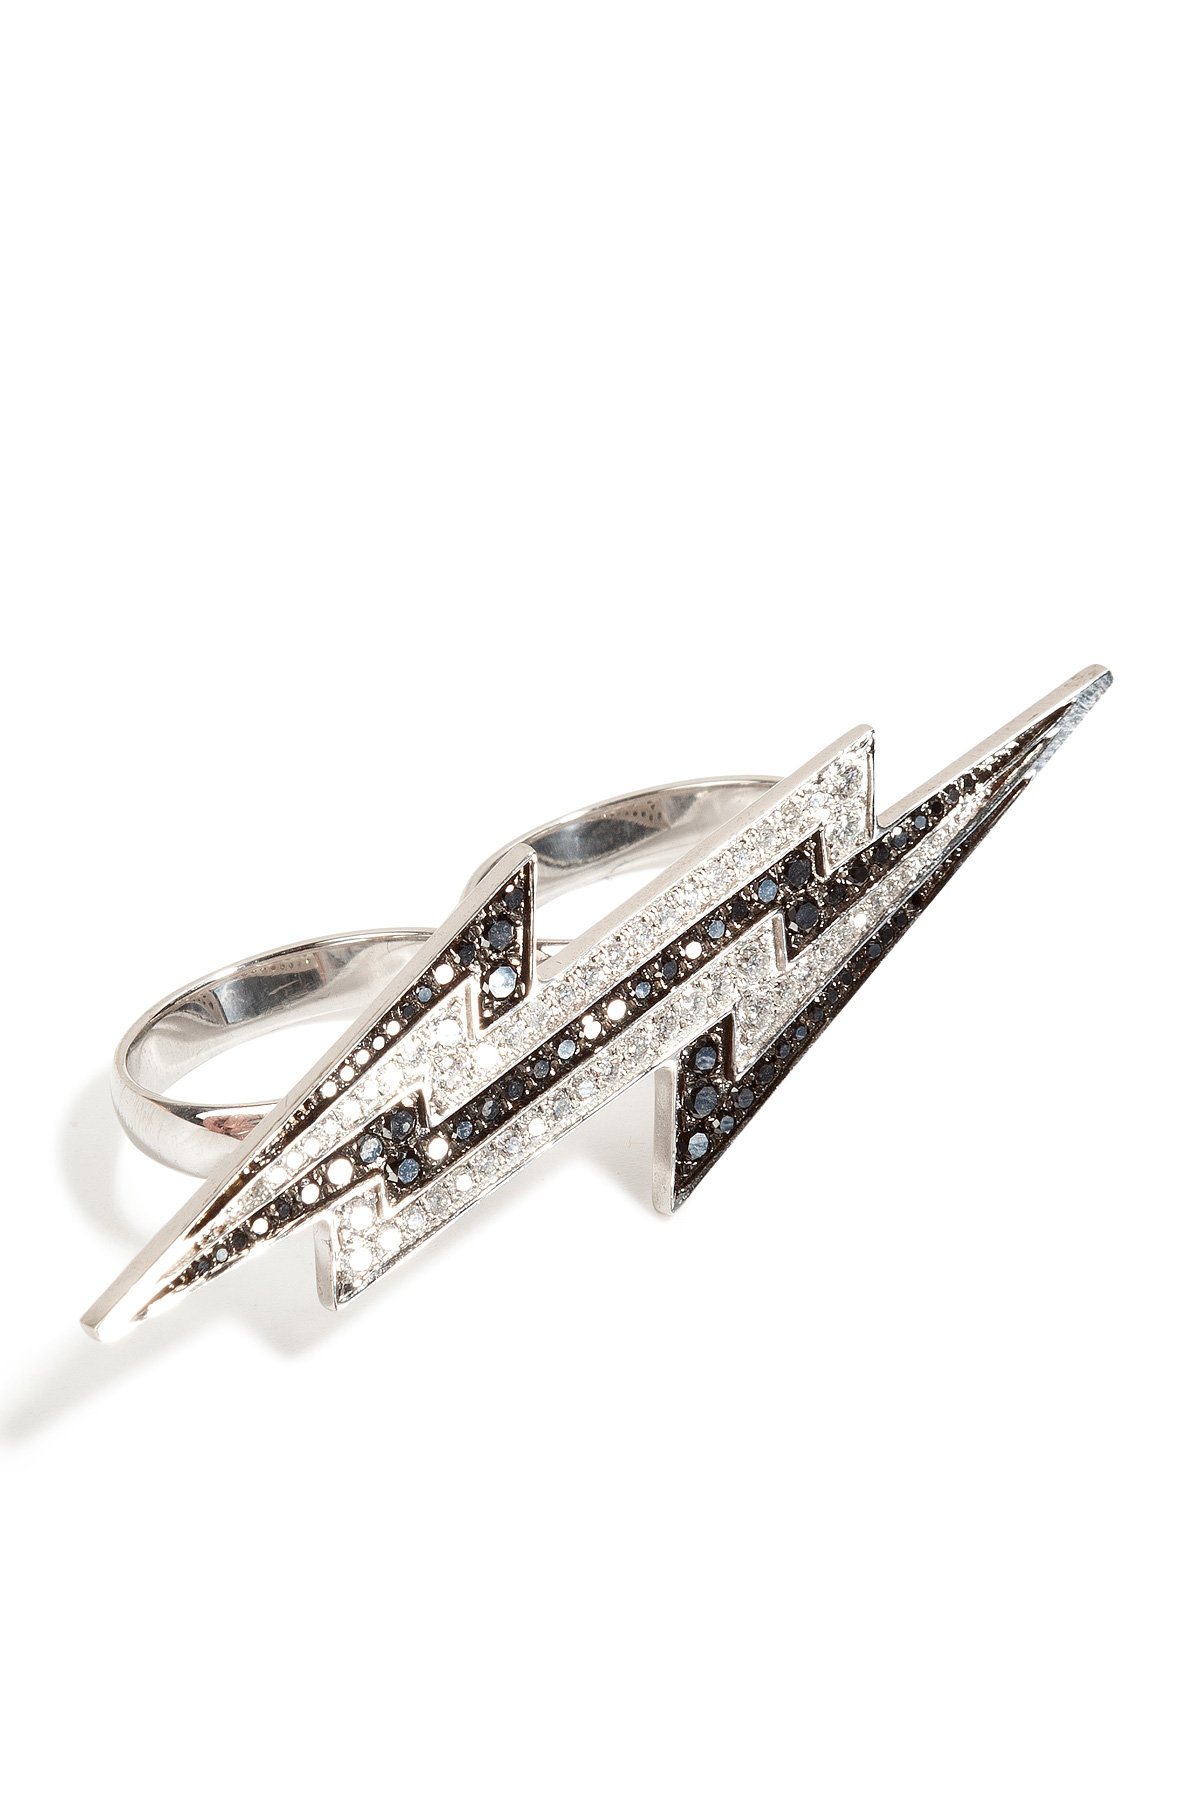 Lynn Ban - Sterling Silver Lightening Bolt Earrings with Diamonds